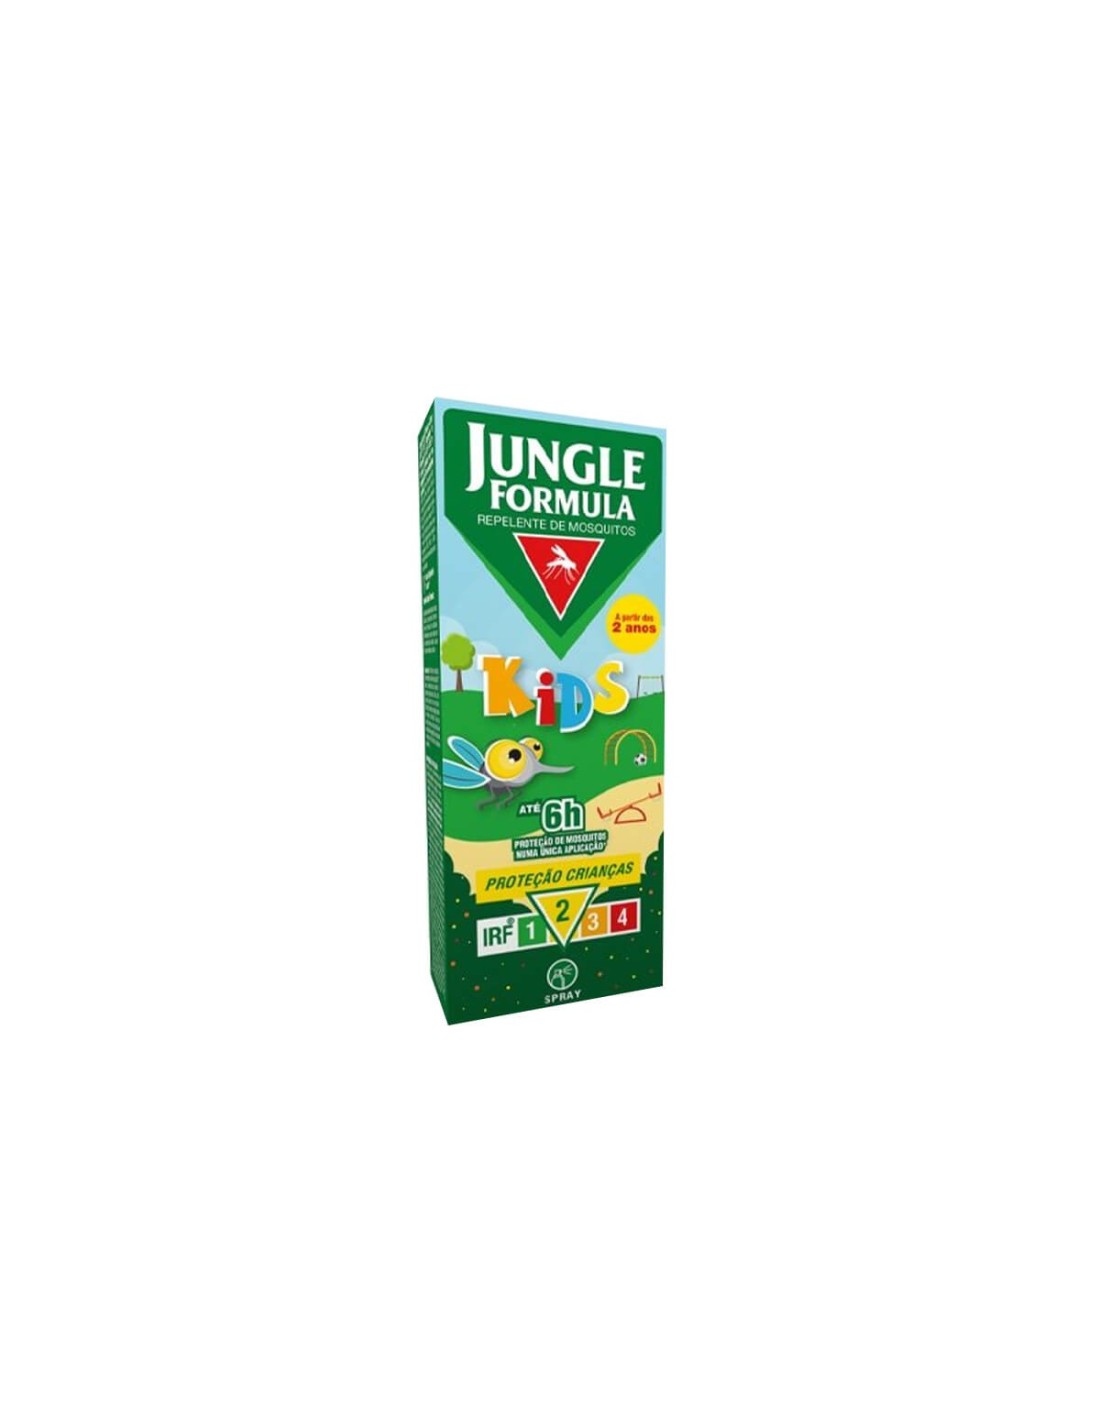 Jungle Formula Kids Spray Repellent 75ml